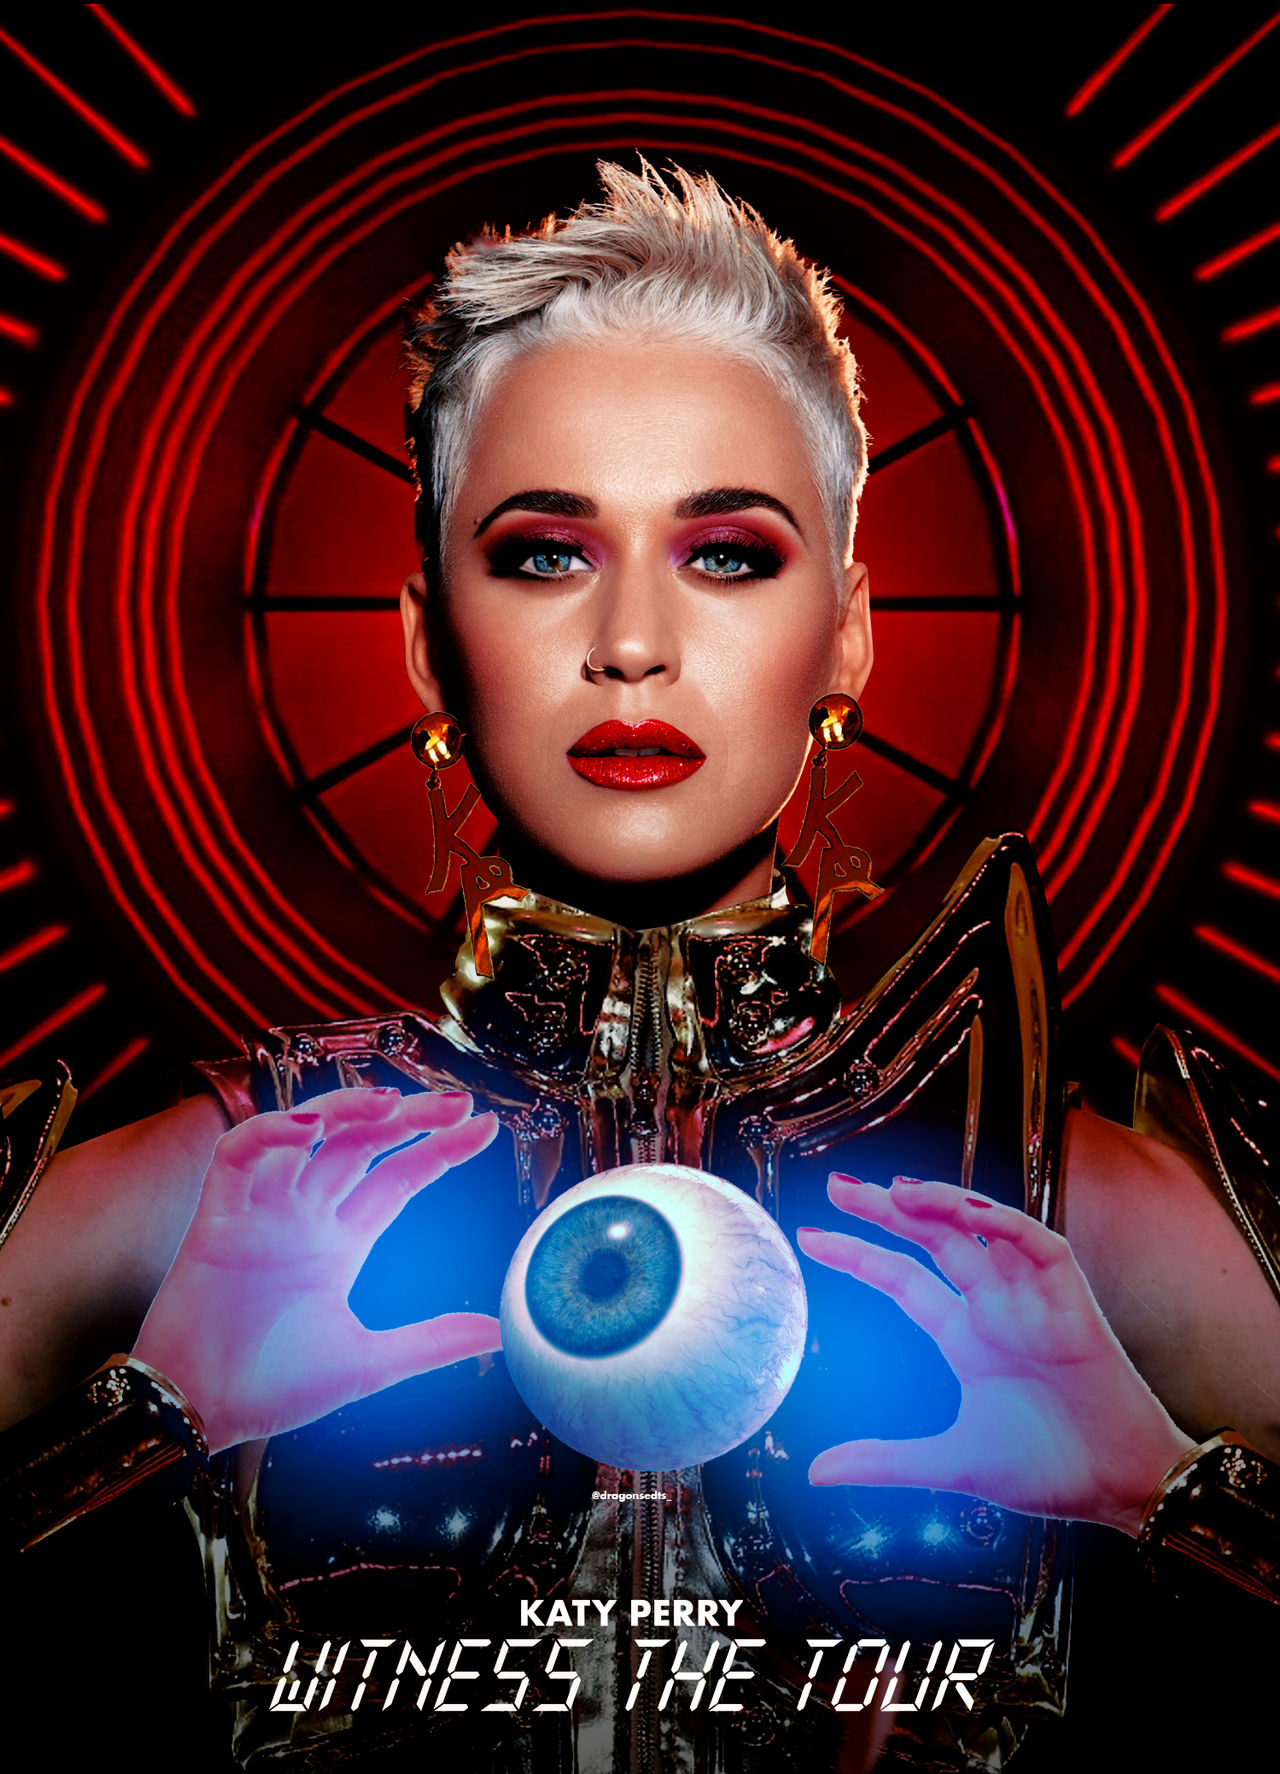 Kwestie Vermeend Sporten Katy Perry - Witness The Tour by Dragonsedits on DeviantArt